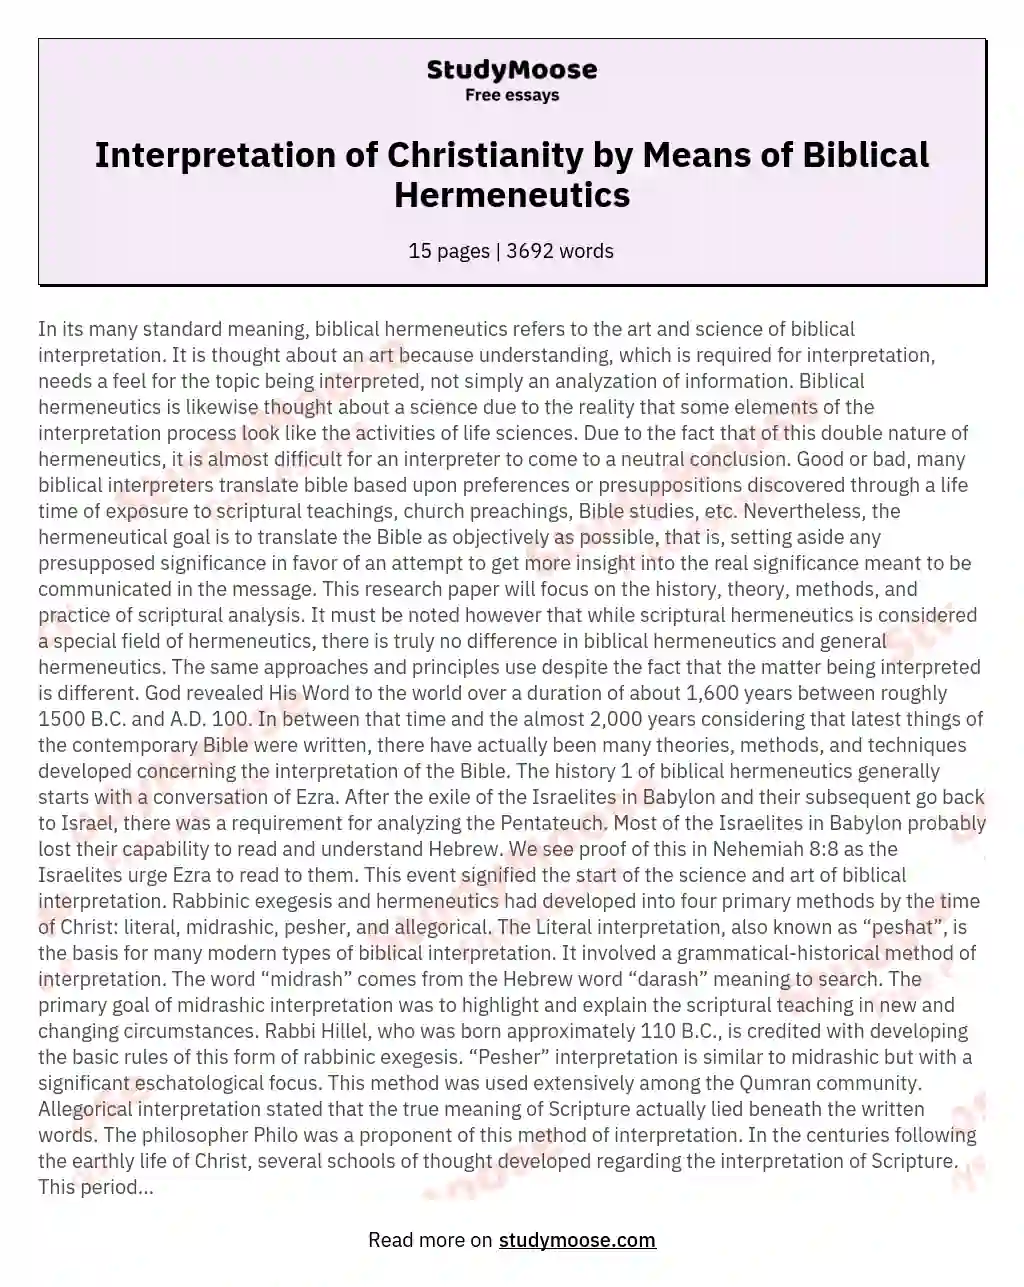 Interpretation of Christianity by Means of Biblical Hermeneutics essay